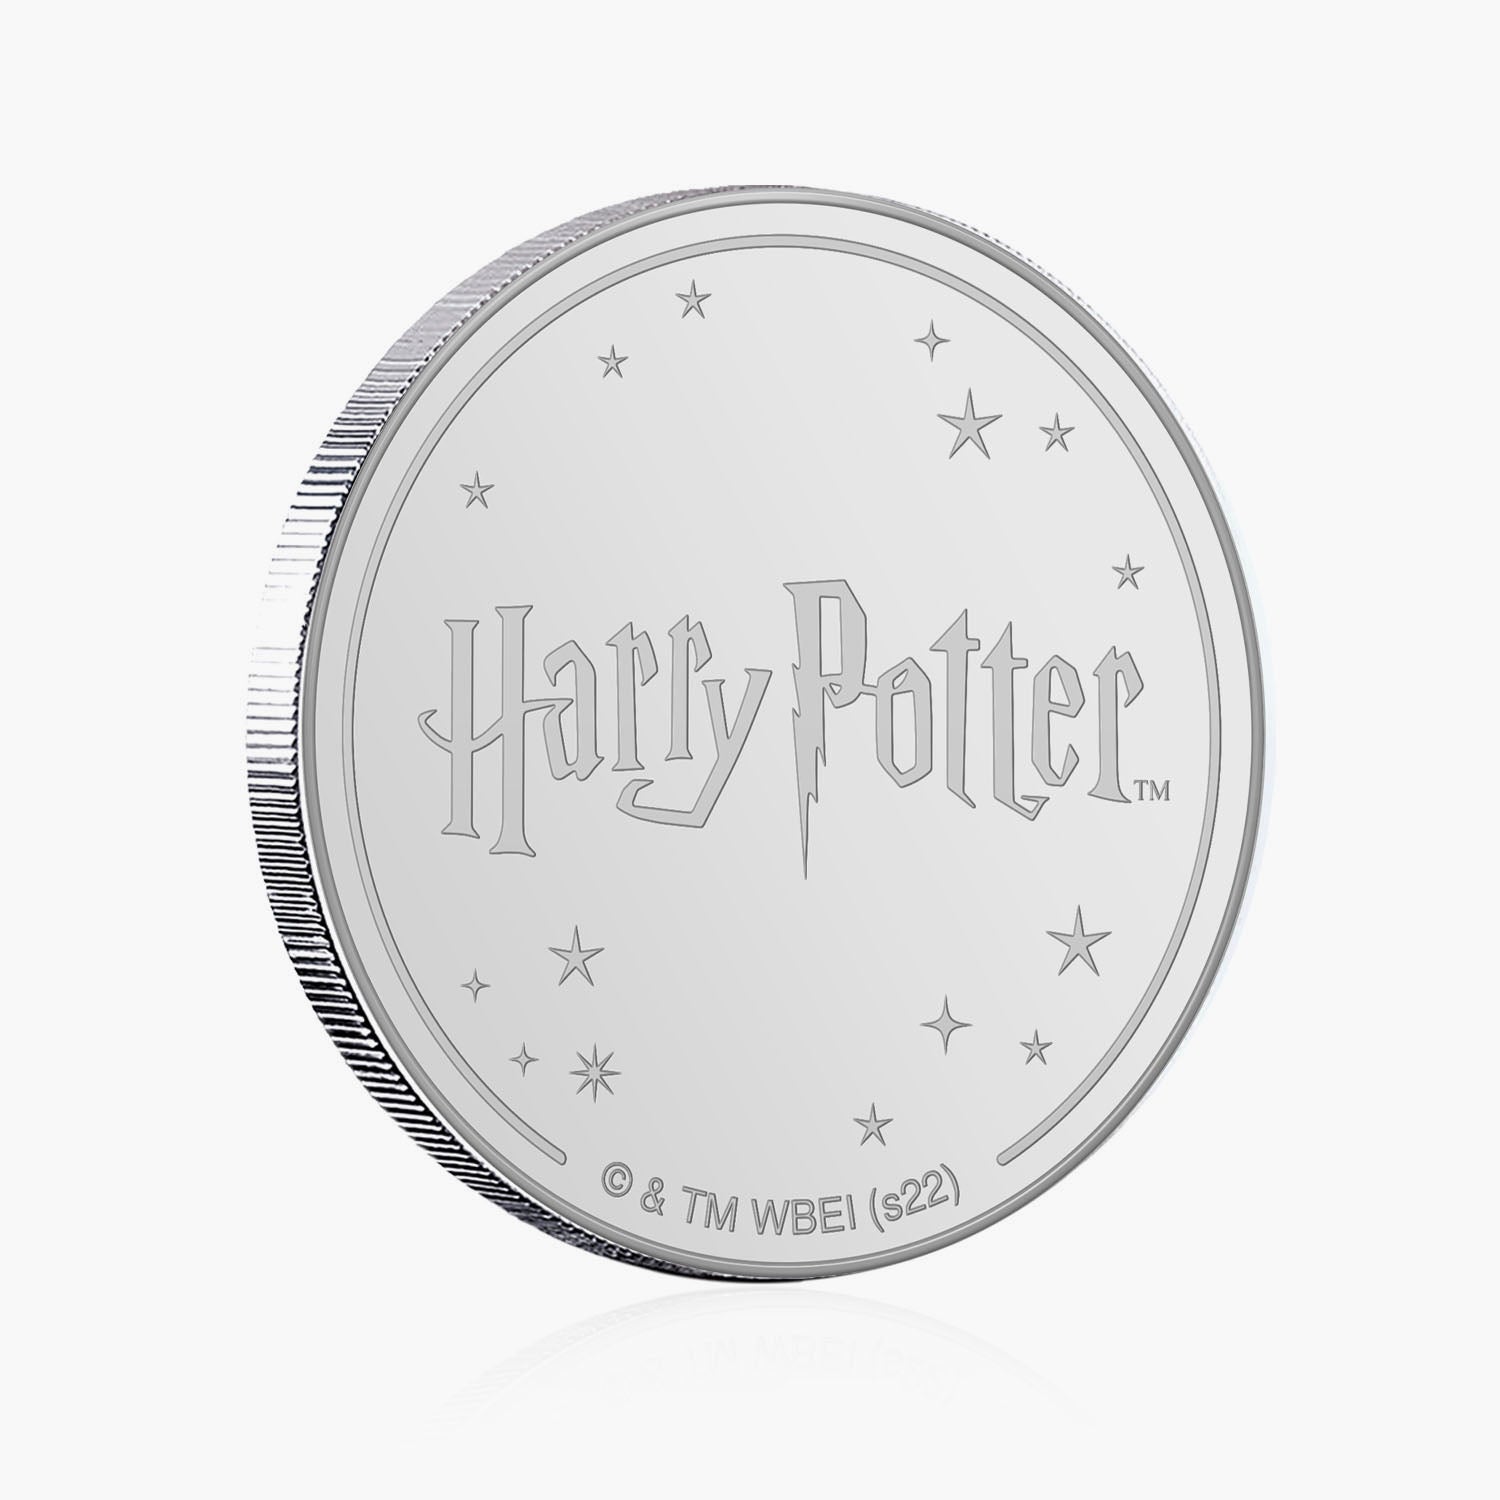 The Hidden Secret Official Harry Potter Commemorative